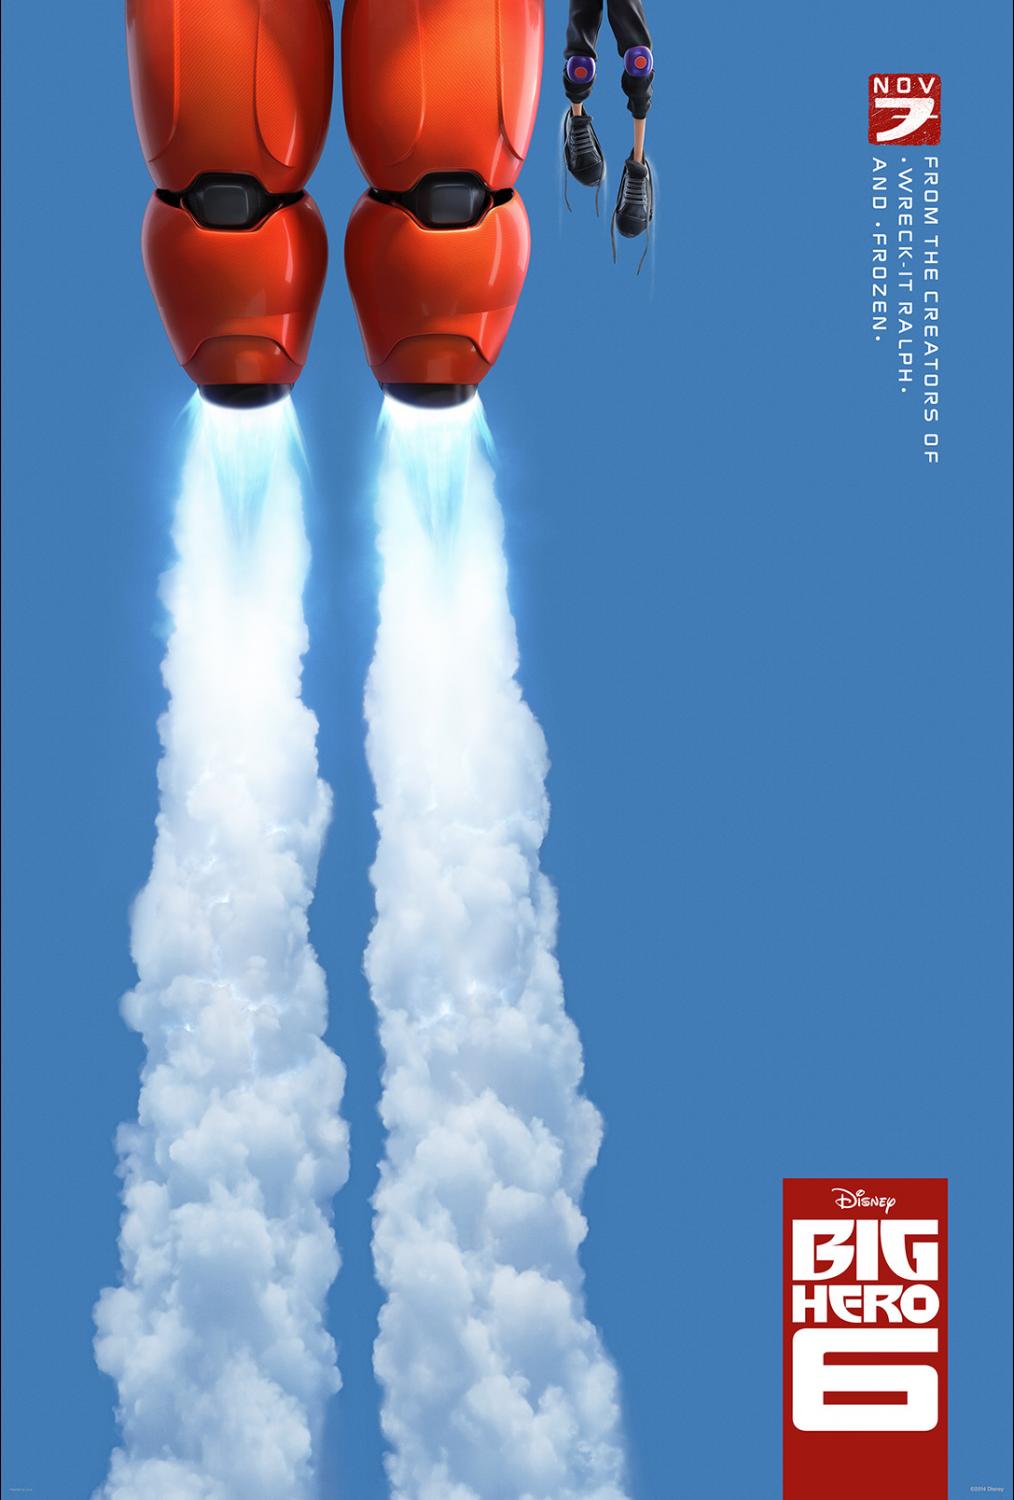 Disney’s BIG HERO 6 Trailer #BigHero6